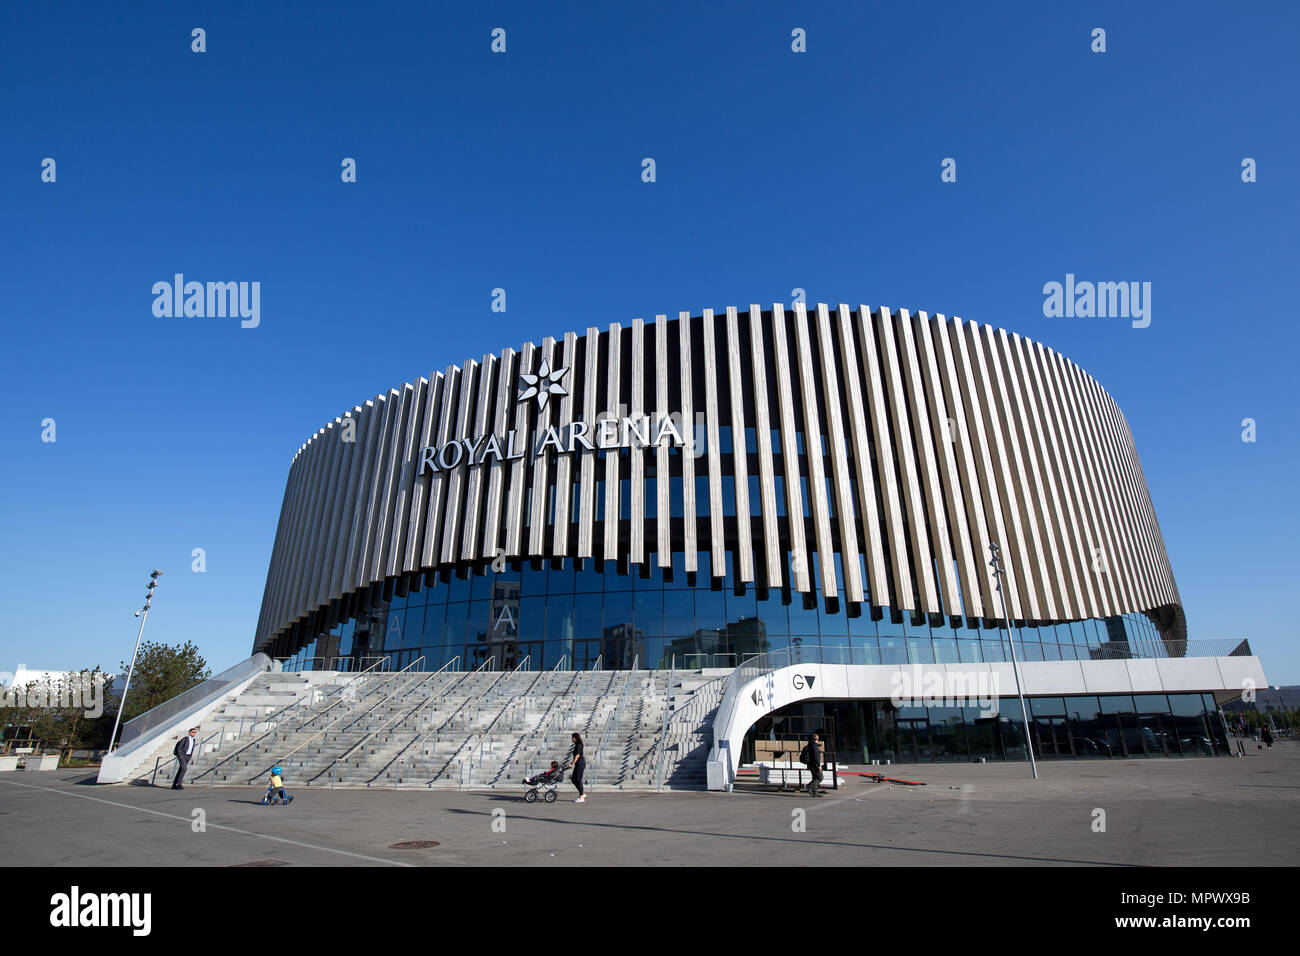 foran Scully Eller Royal Arena Copenhagen Stock Photo - Alamy